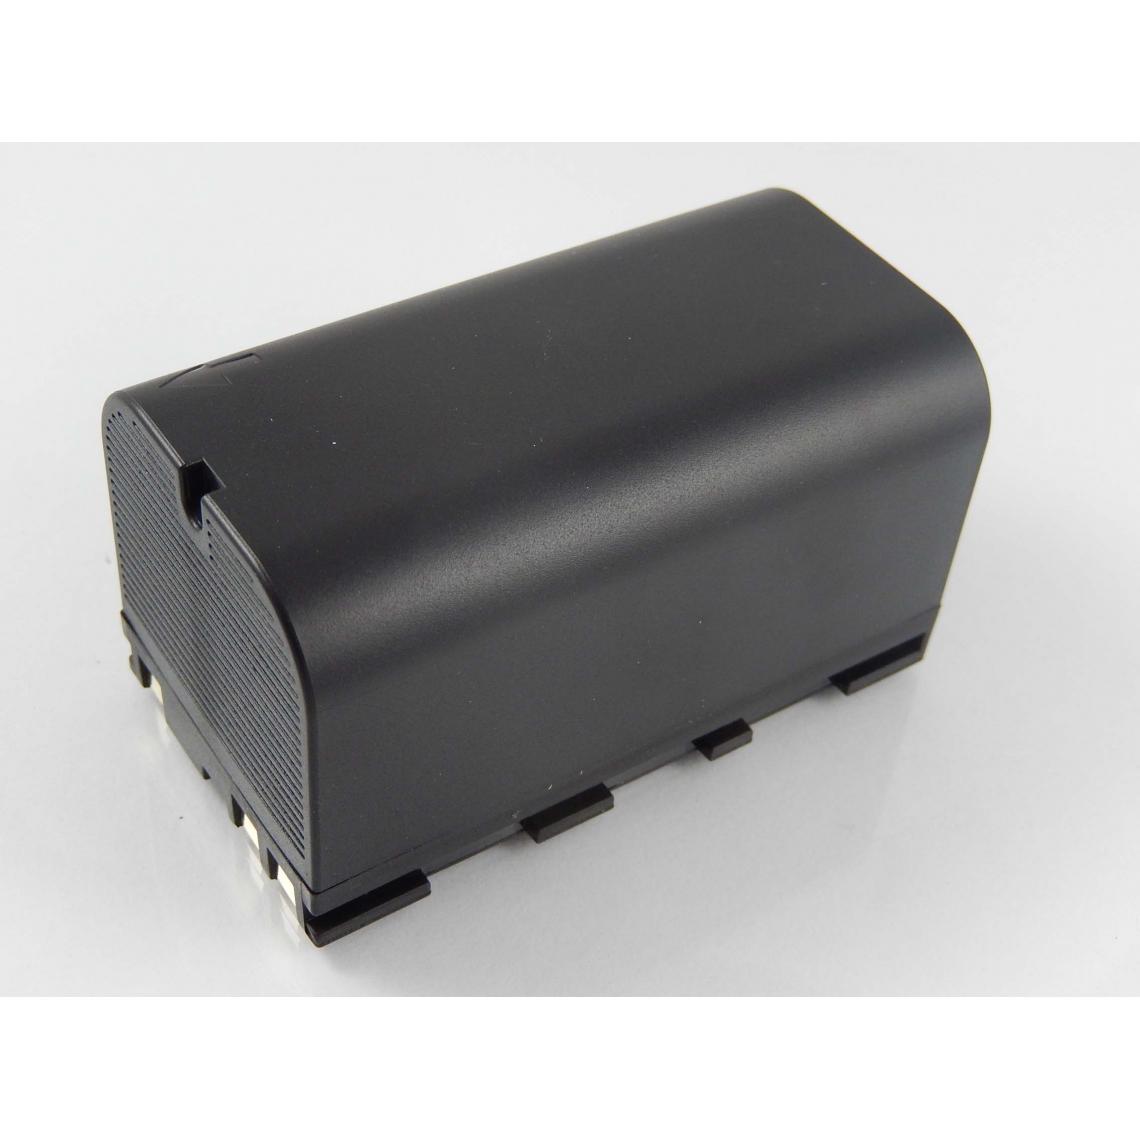 Vhbw - vhbw Batterie compatible avec Leica TPS1100, TPS1200, TPS300 dispositif de mesure laser, outil de mesure (5600mAh, 7,4V, Li-ion) - Piles rechargeables